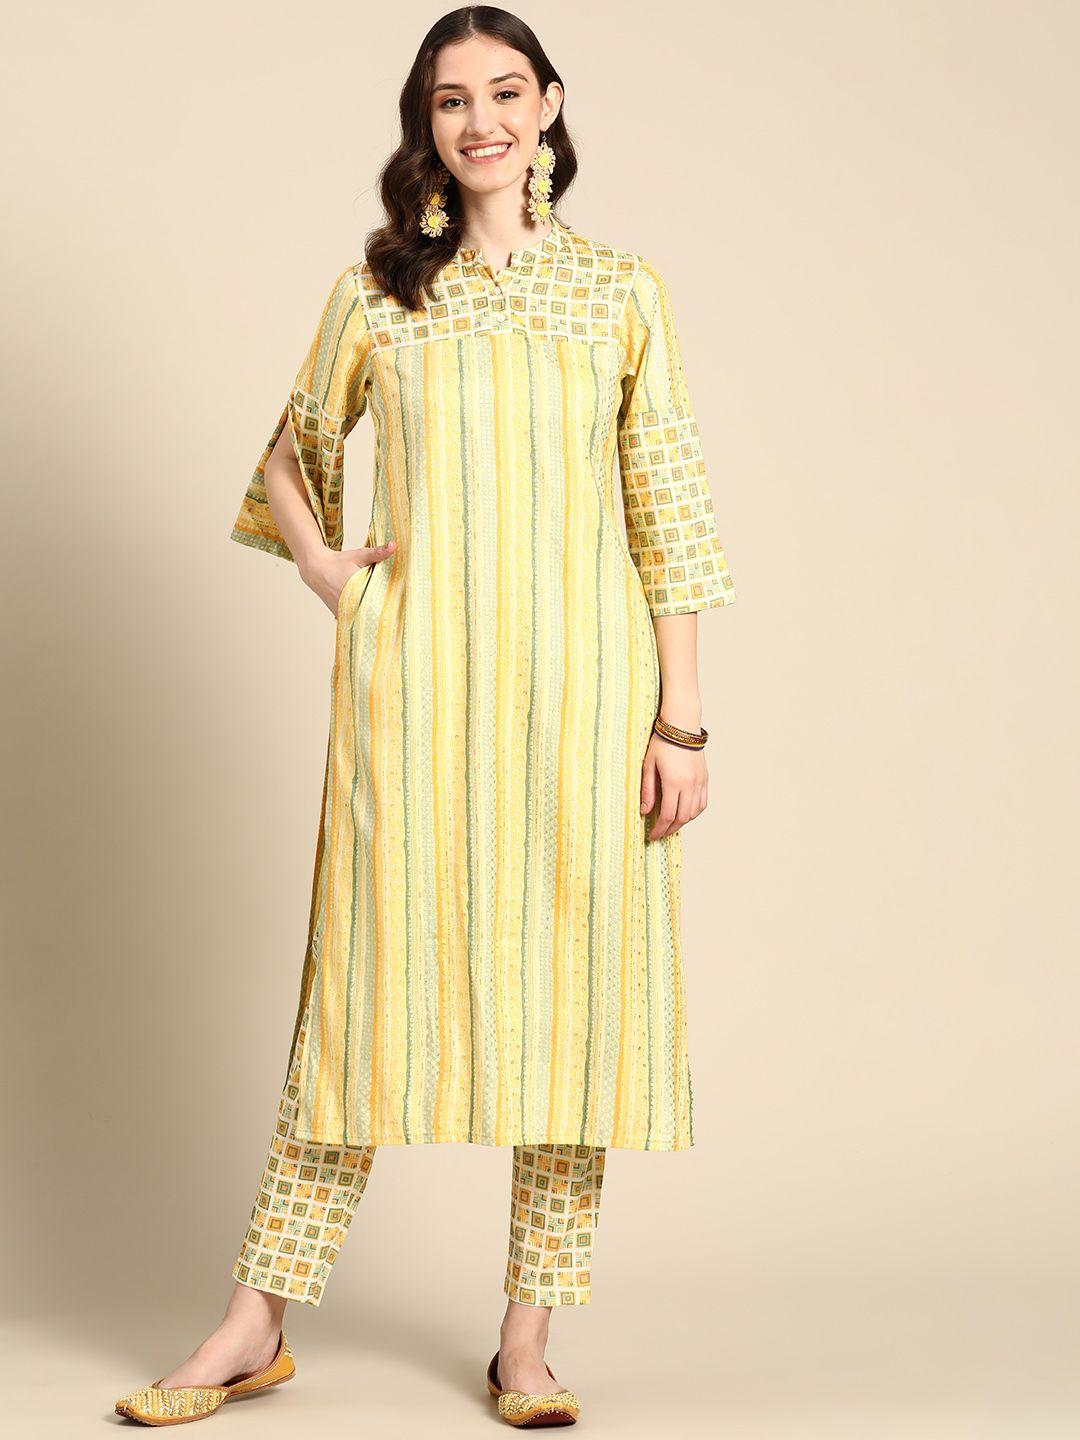 sangria women yellow ethnic motifs printed kurta with trousers